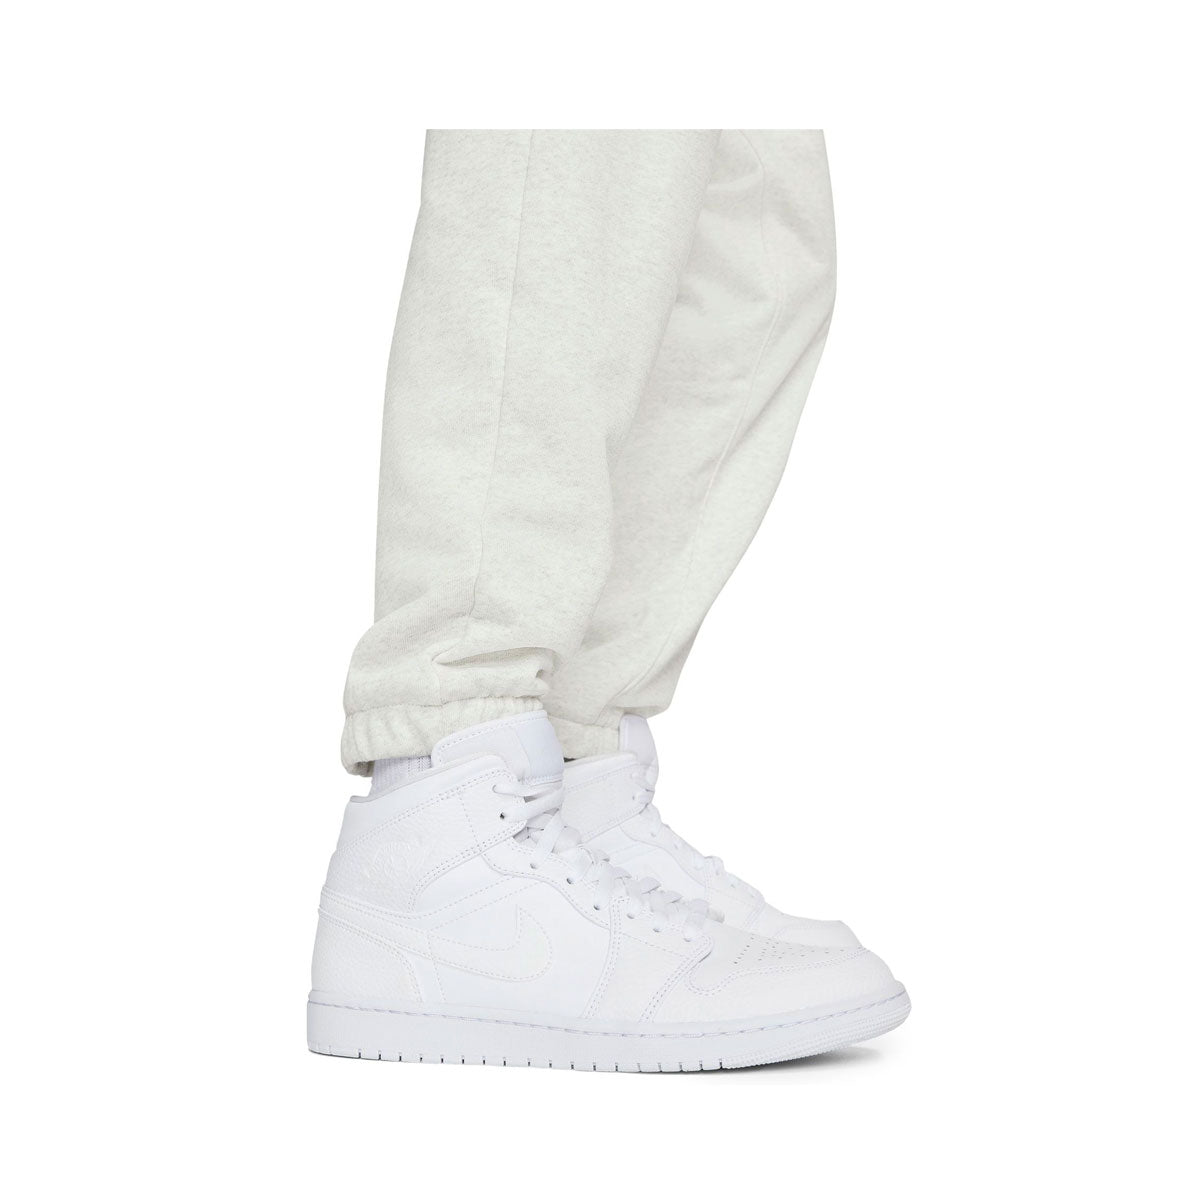 Air Jordan Men's Essential Statement Fleece Pants Oatmeal Heather - KickzStore